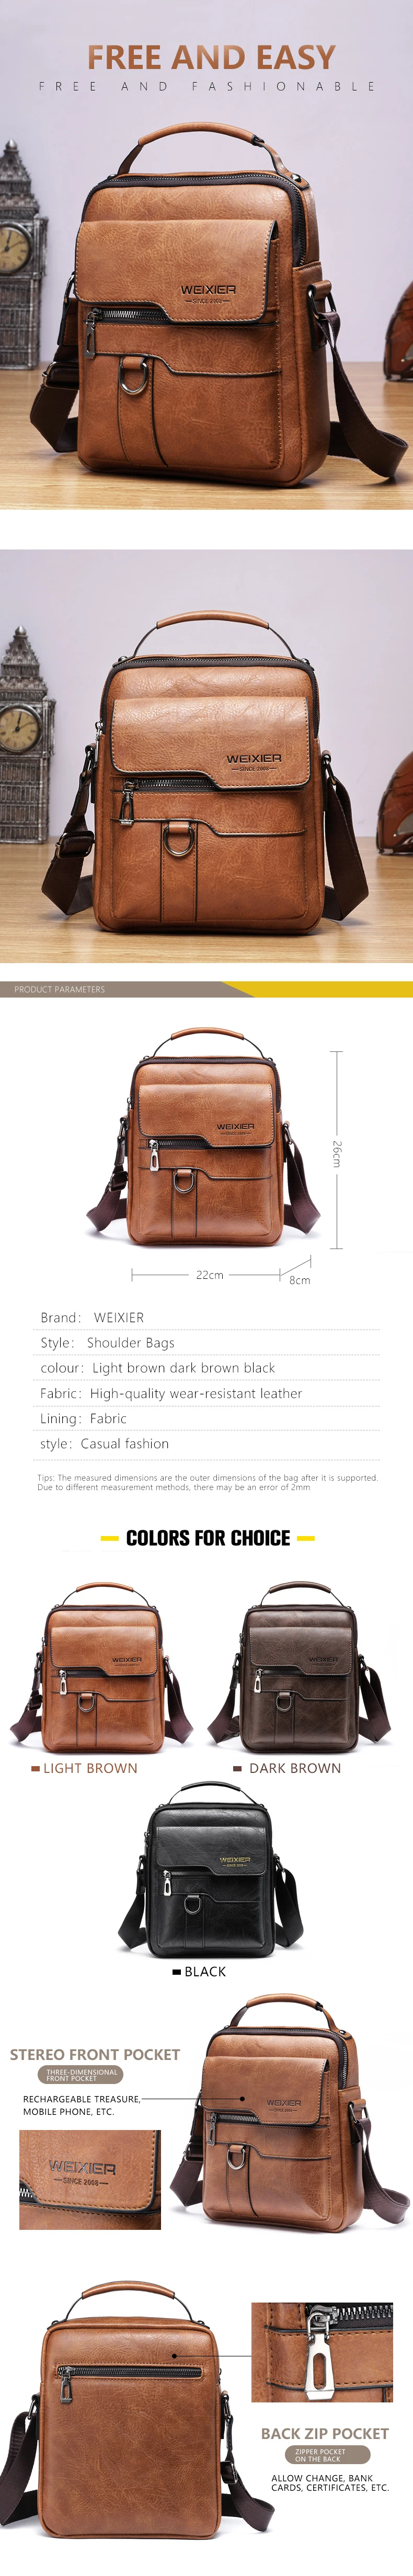 Wholesale Branded Leather High Quality Men's Messenger Shoulder Bags ...